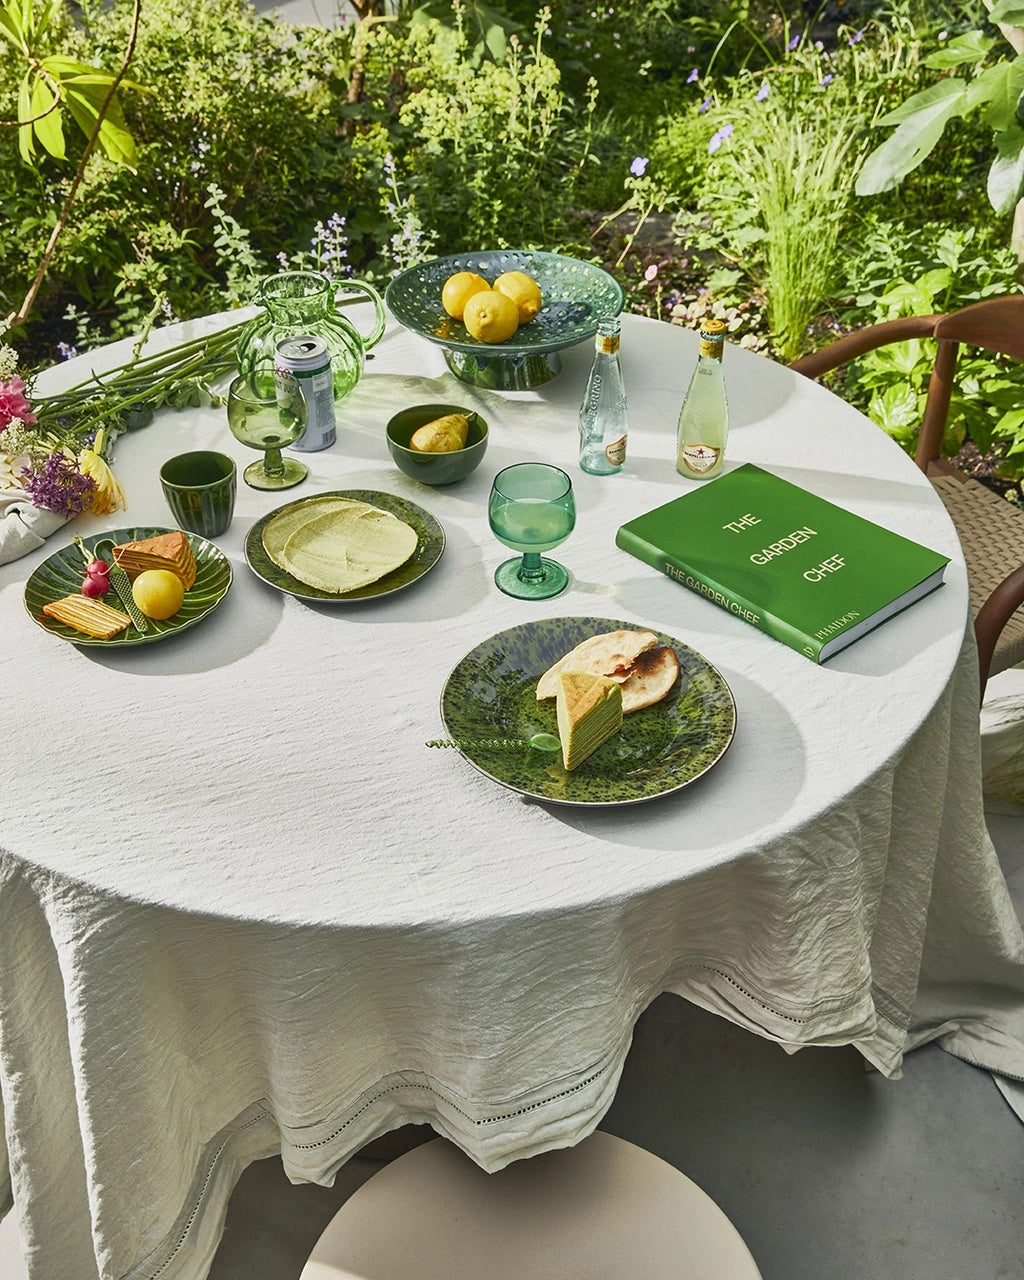 the emeralds ceramic dinner plate spotted - LEEF mode en accessoires